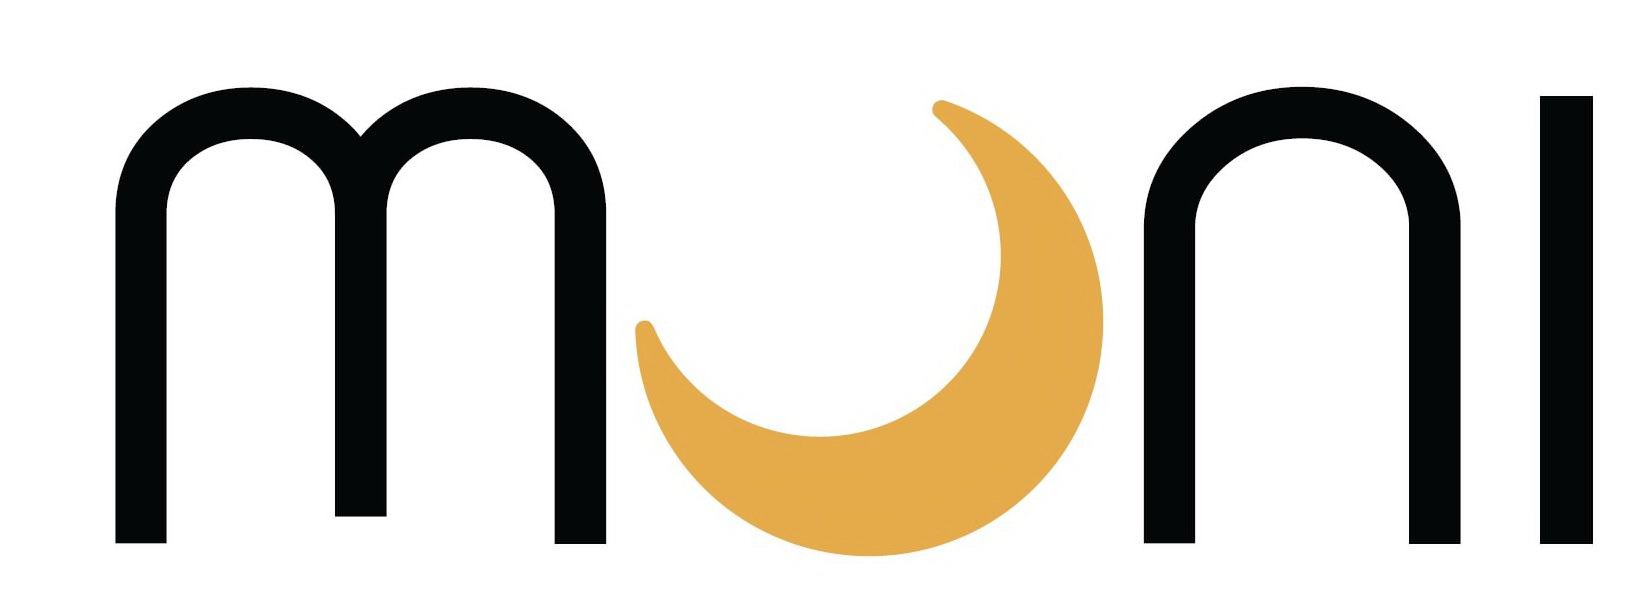 Trademark Logo MUNI